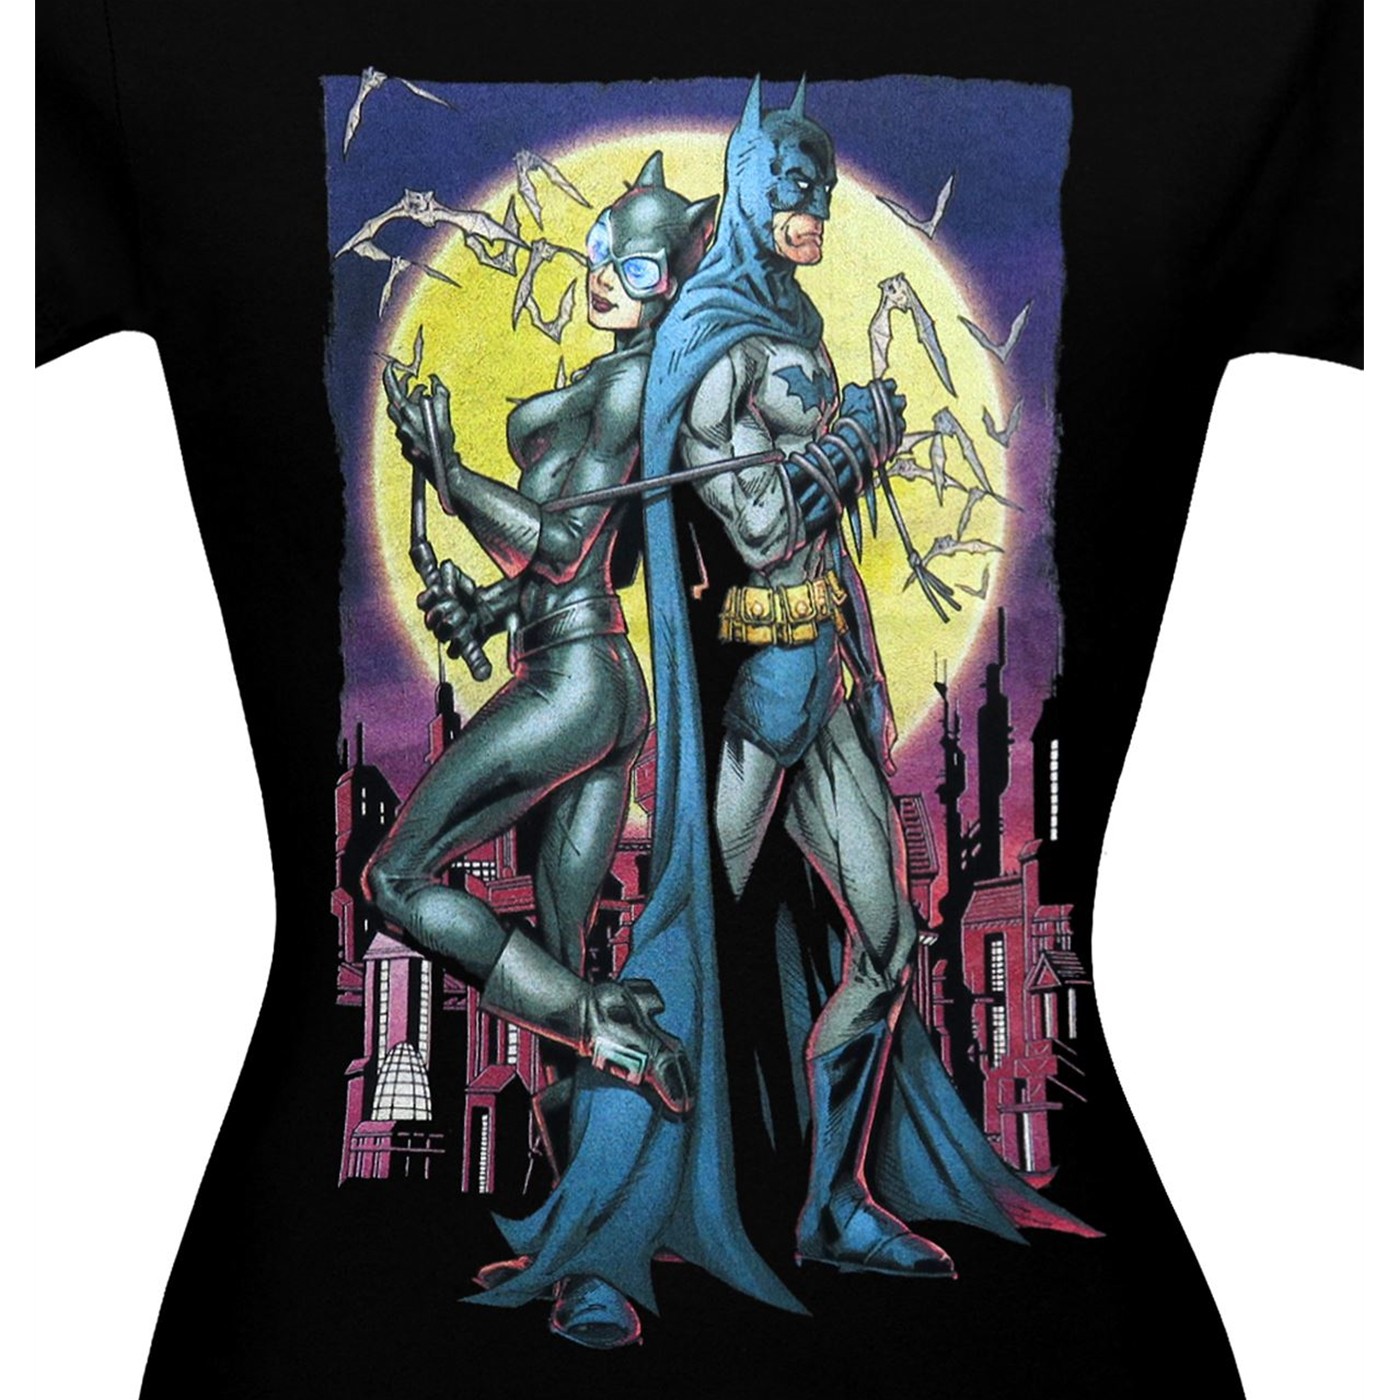 Batman Catwoman Wrap Women's T-Shirt